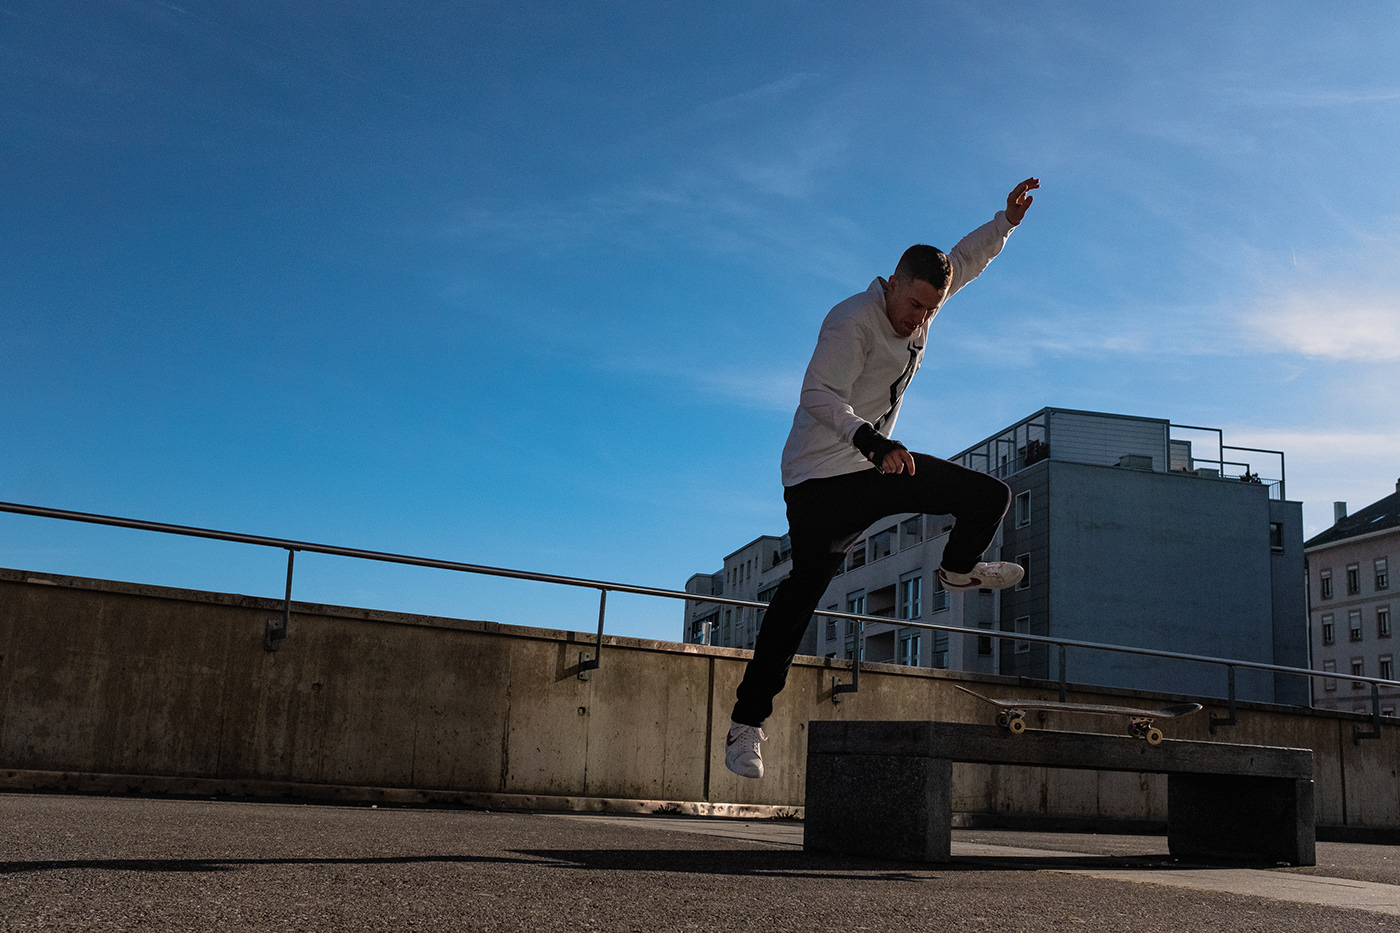 skateboard skater street photography Urban Street skateboarding Photography  Fujifilm X100F Fribourg Switzerland